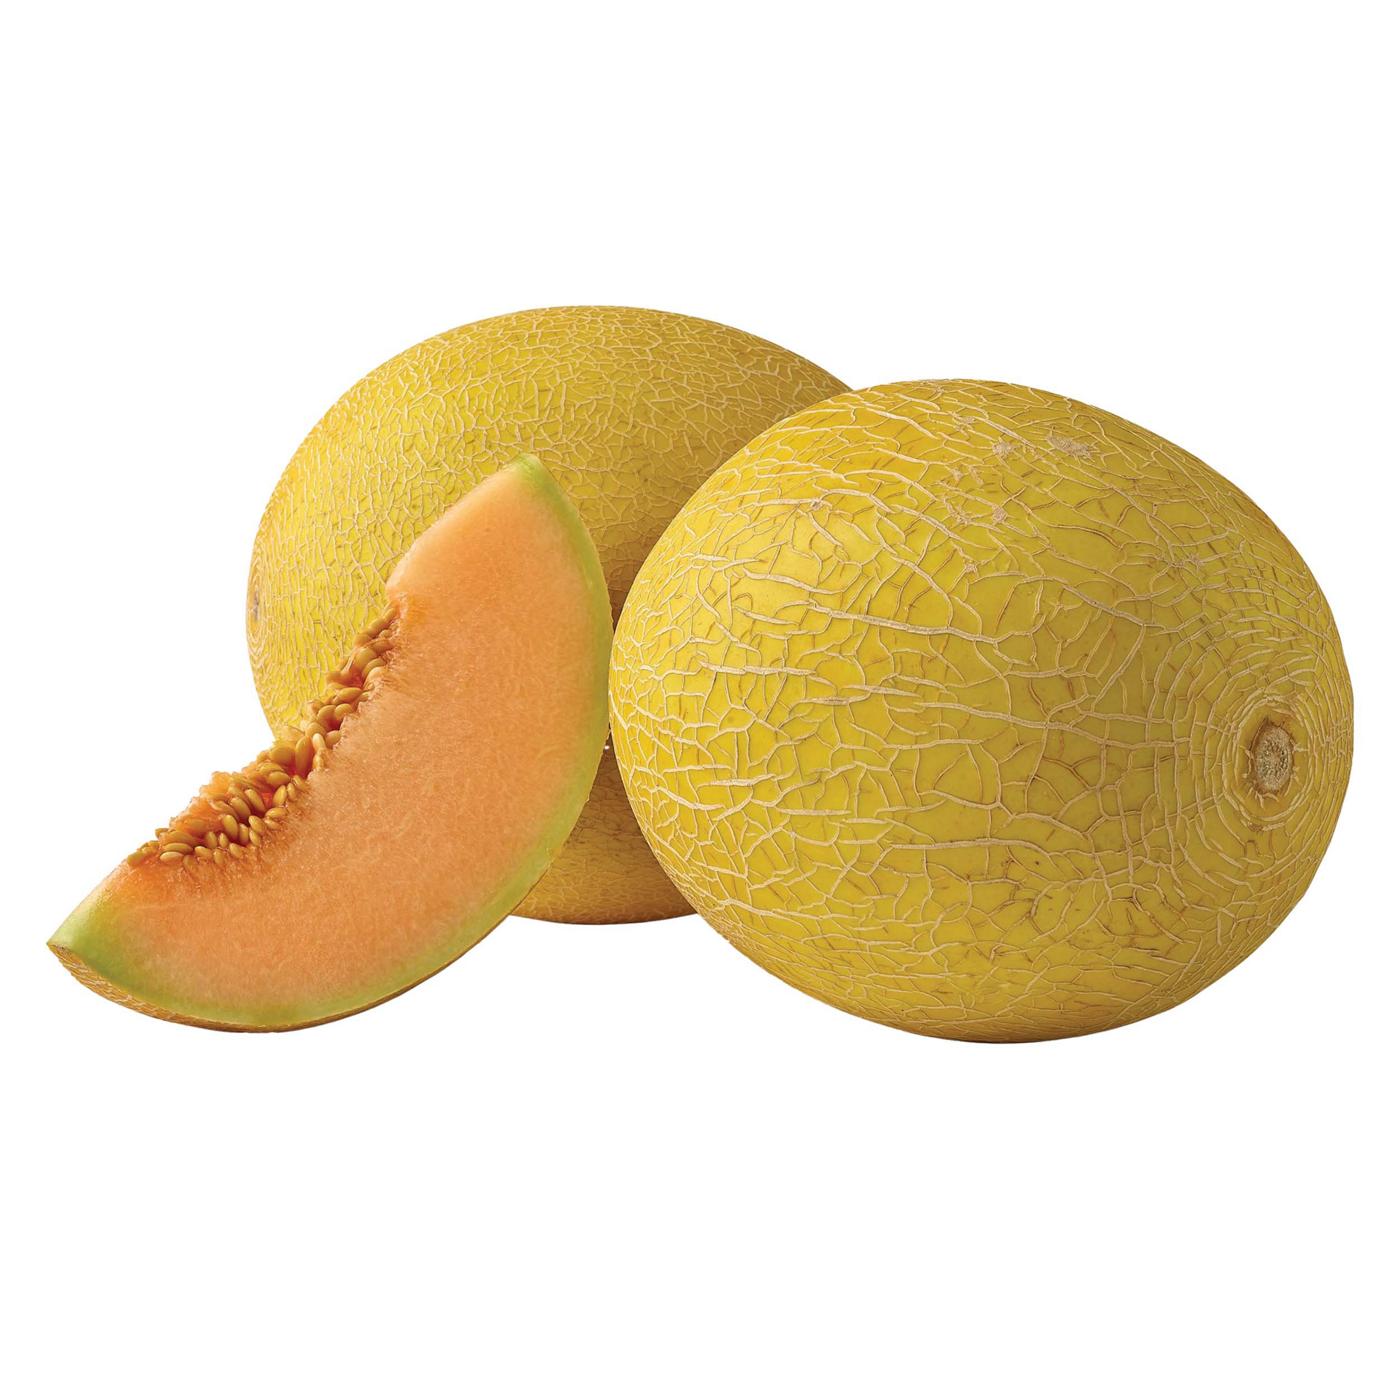 H-E-B Texas Roots Fresh Golden Crush Cantaloupe; image 1 of 2